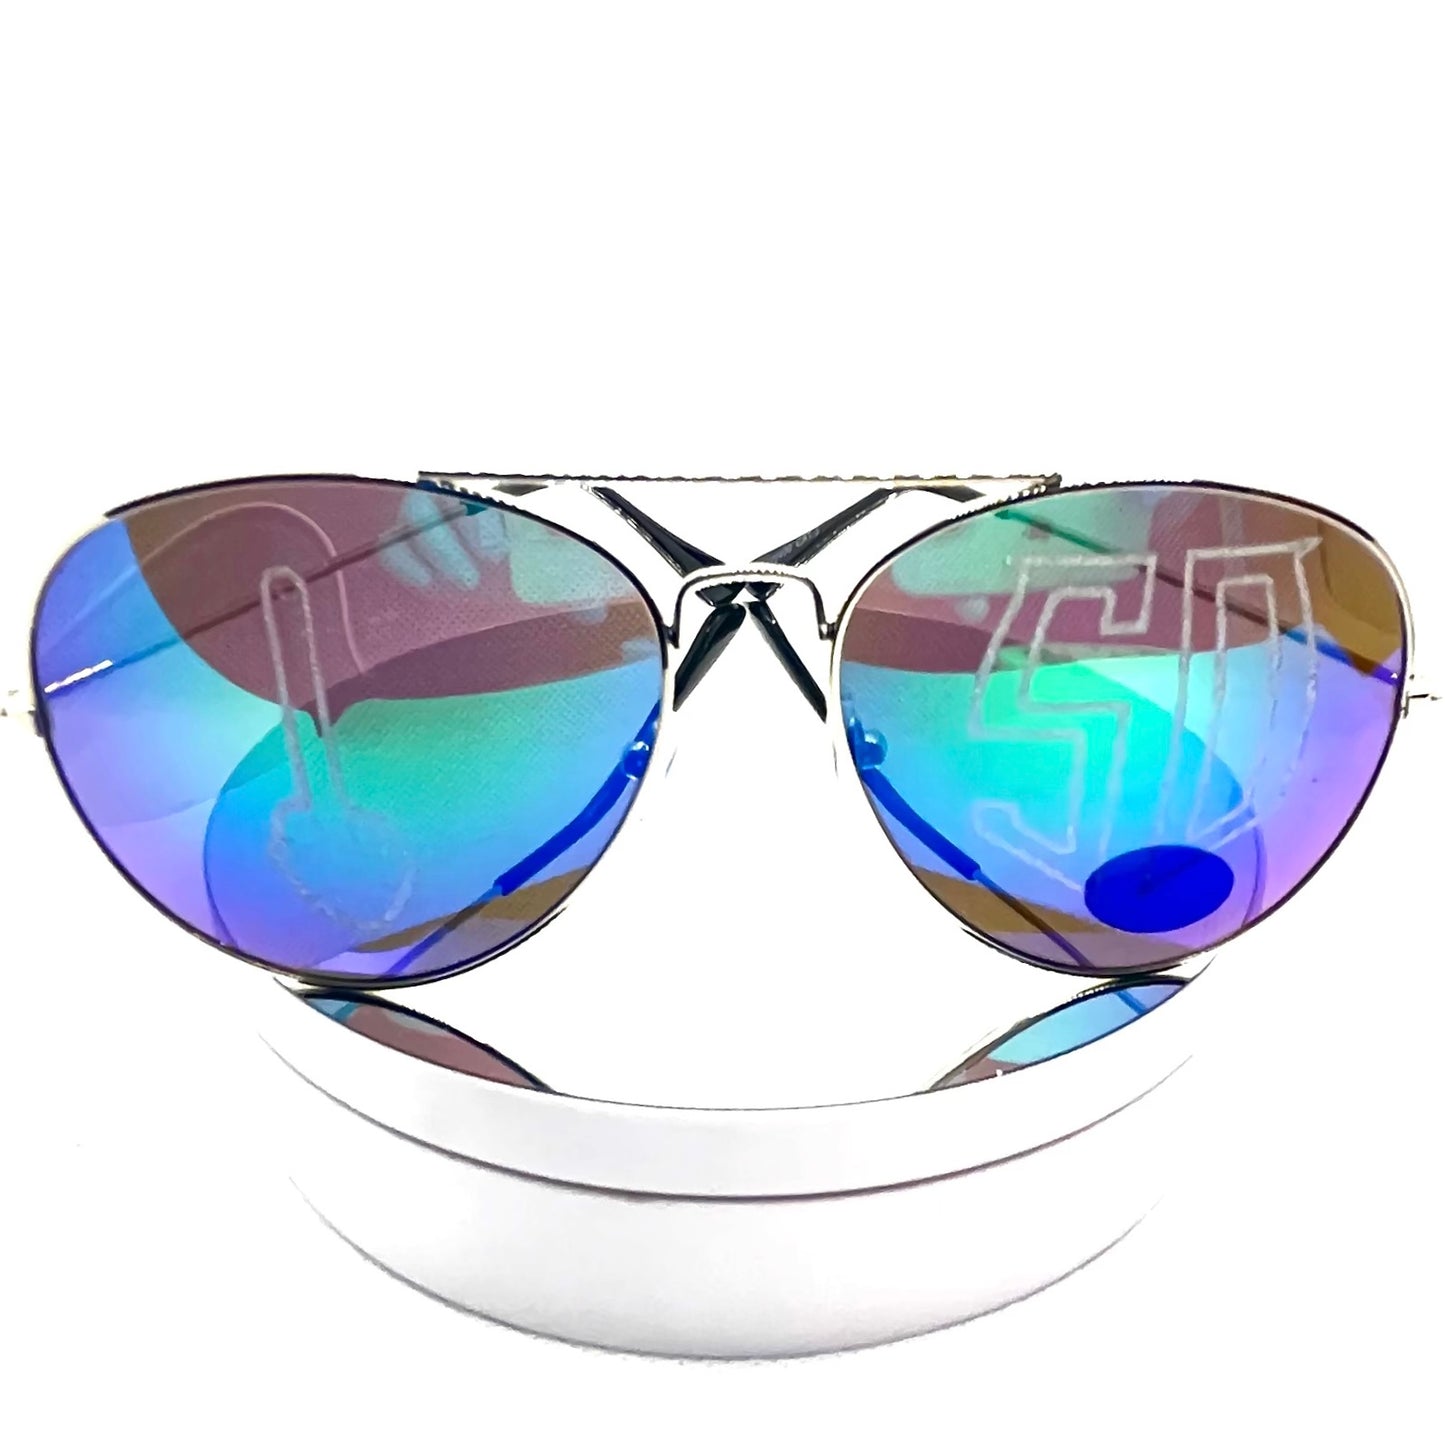 Bassman Sunglasses